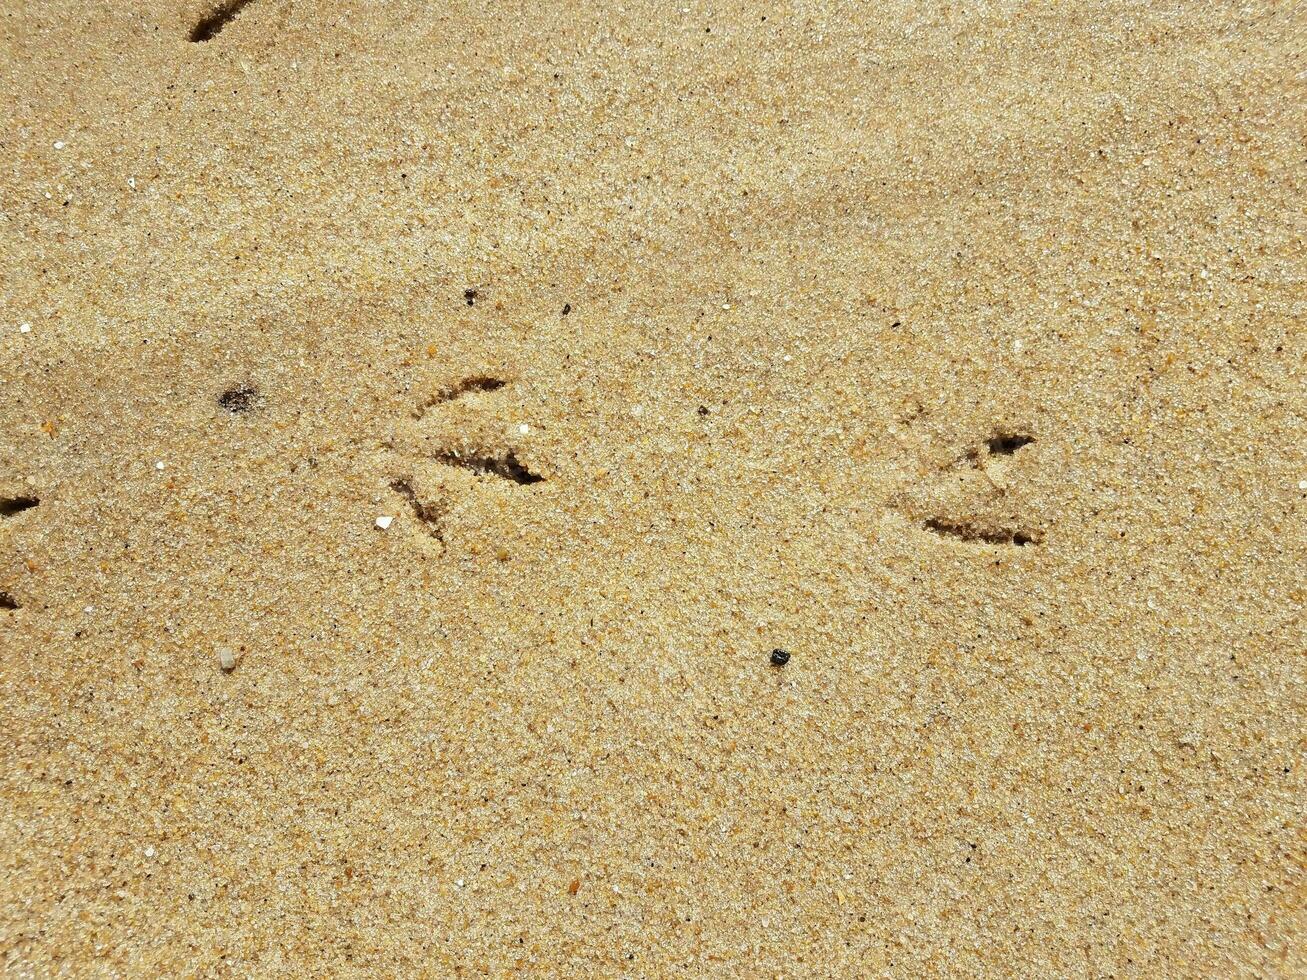 bird foot prints in wet sand at beach photo